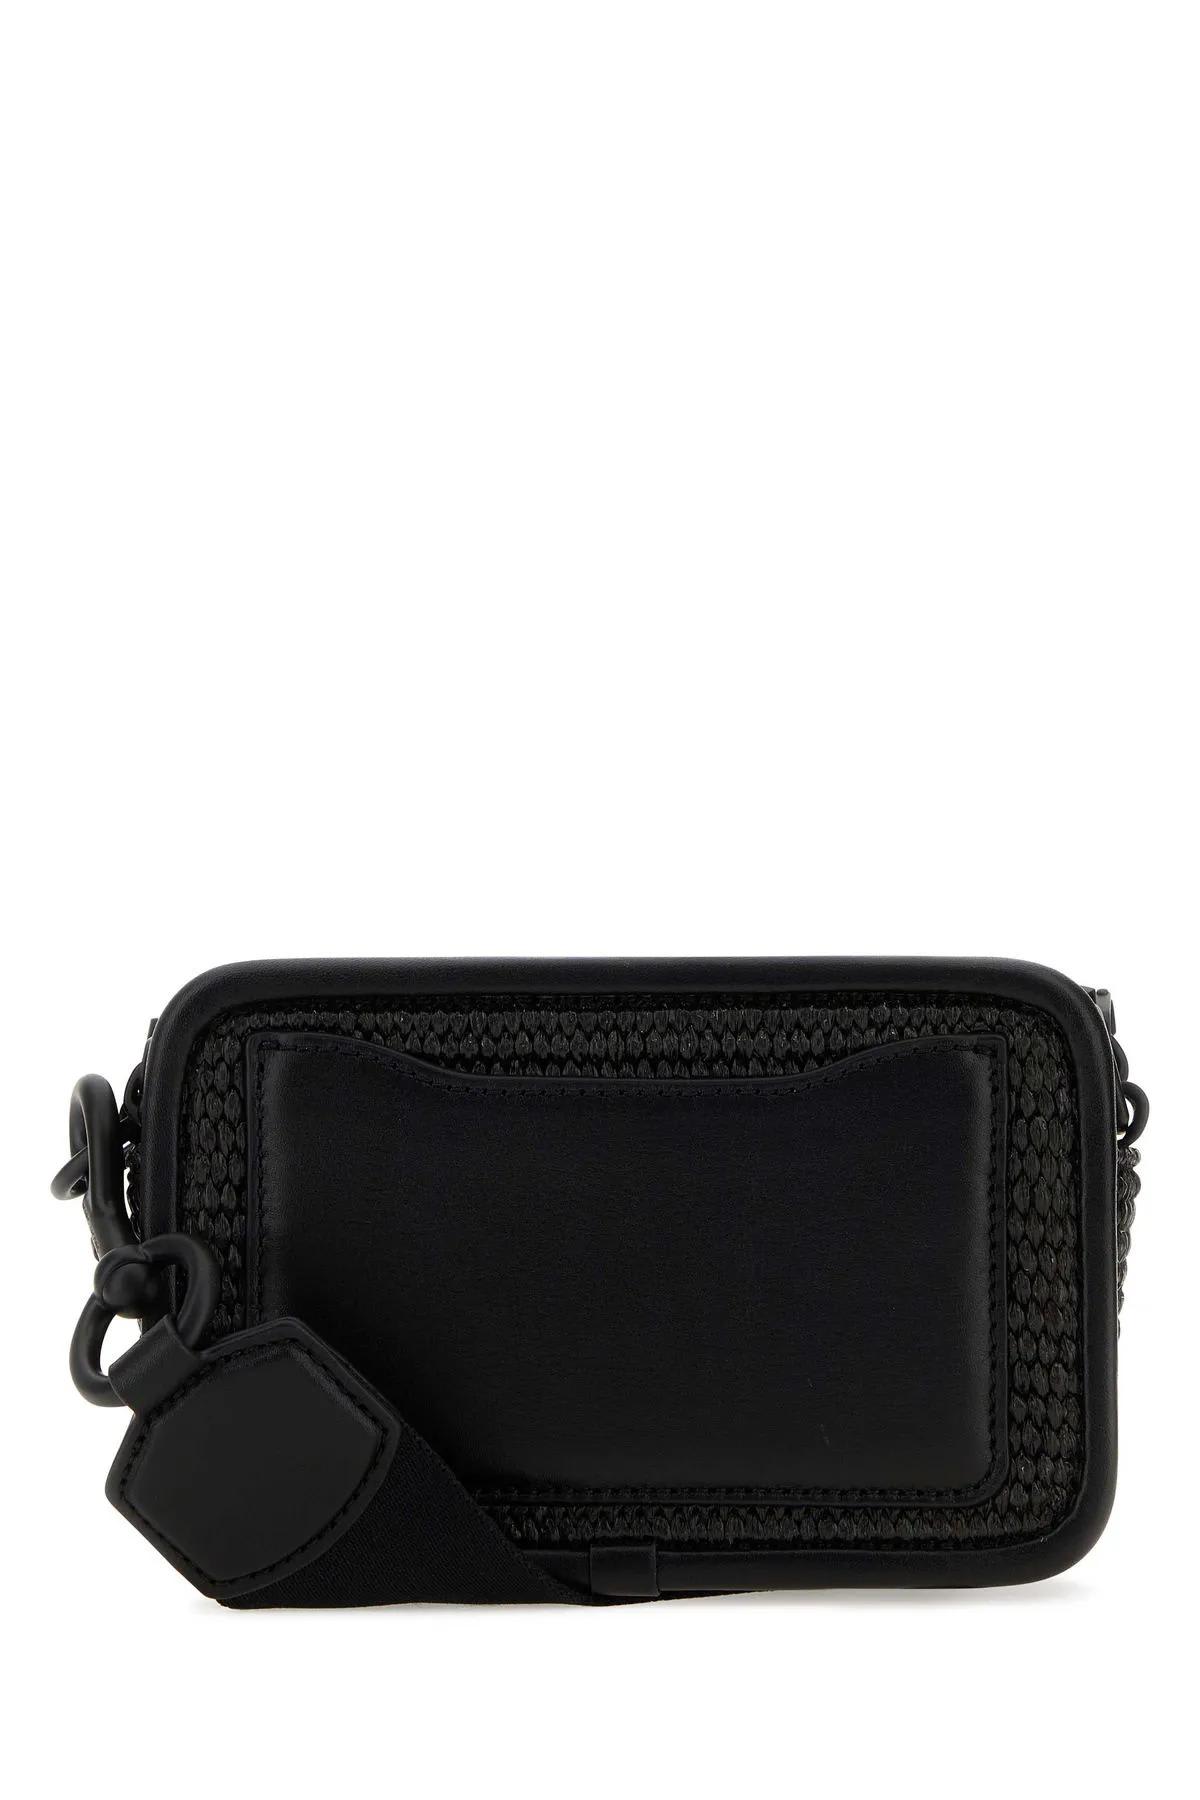 Marc Jacobs Black Raffia The Snapshot Crossbody Bag | ModeSens